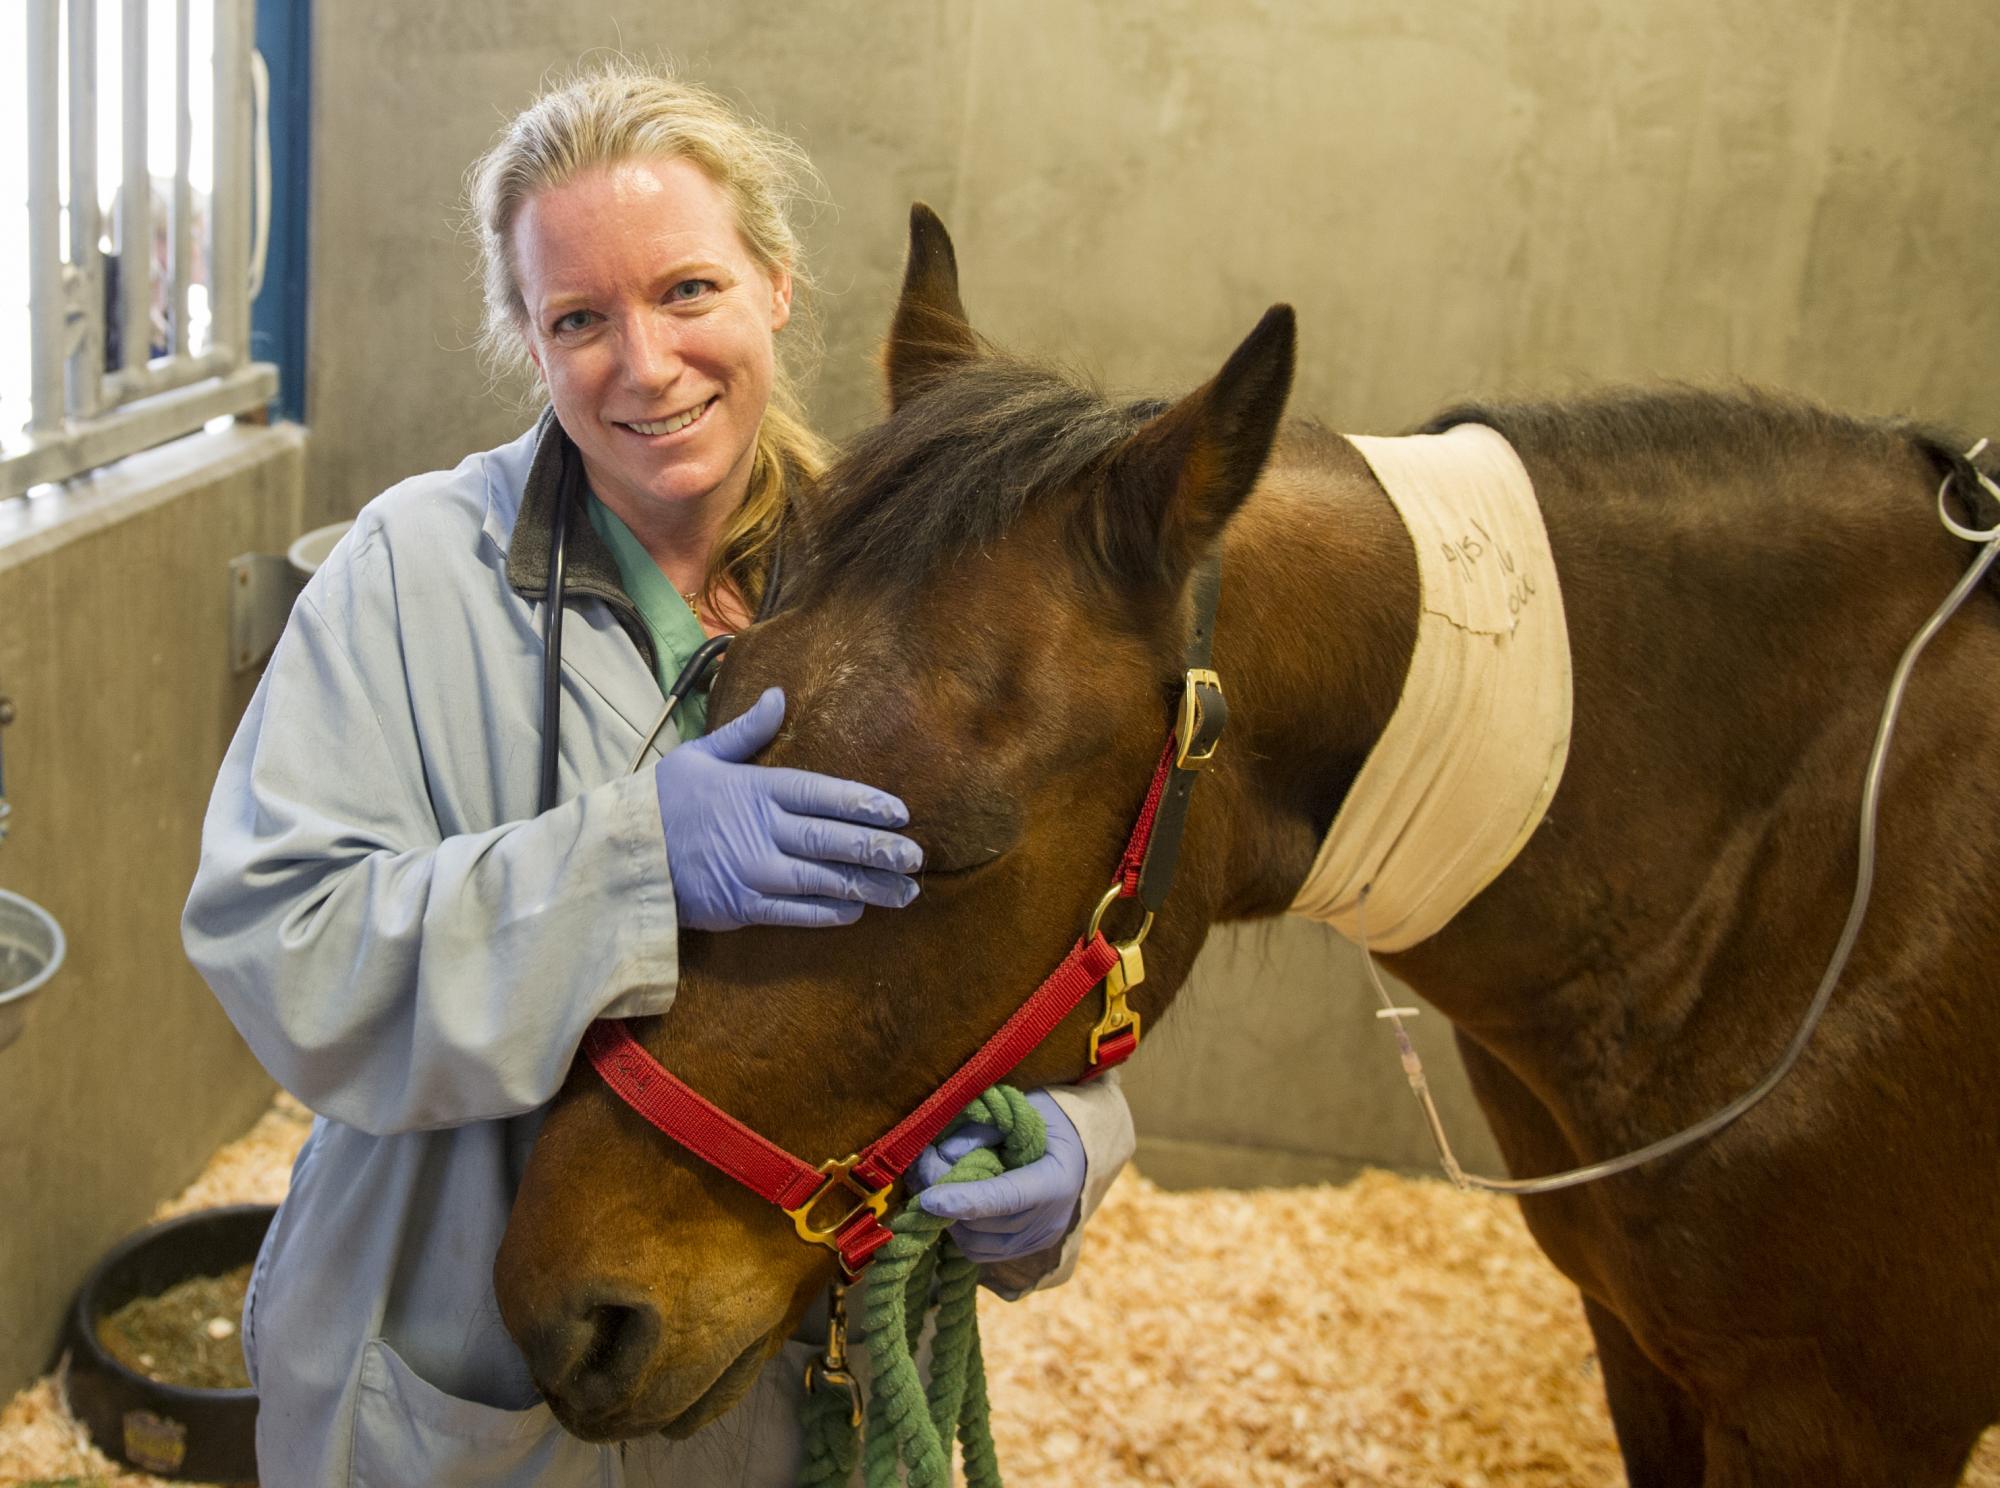 A vet comforts her horse patient